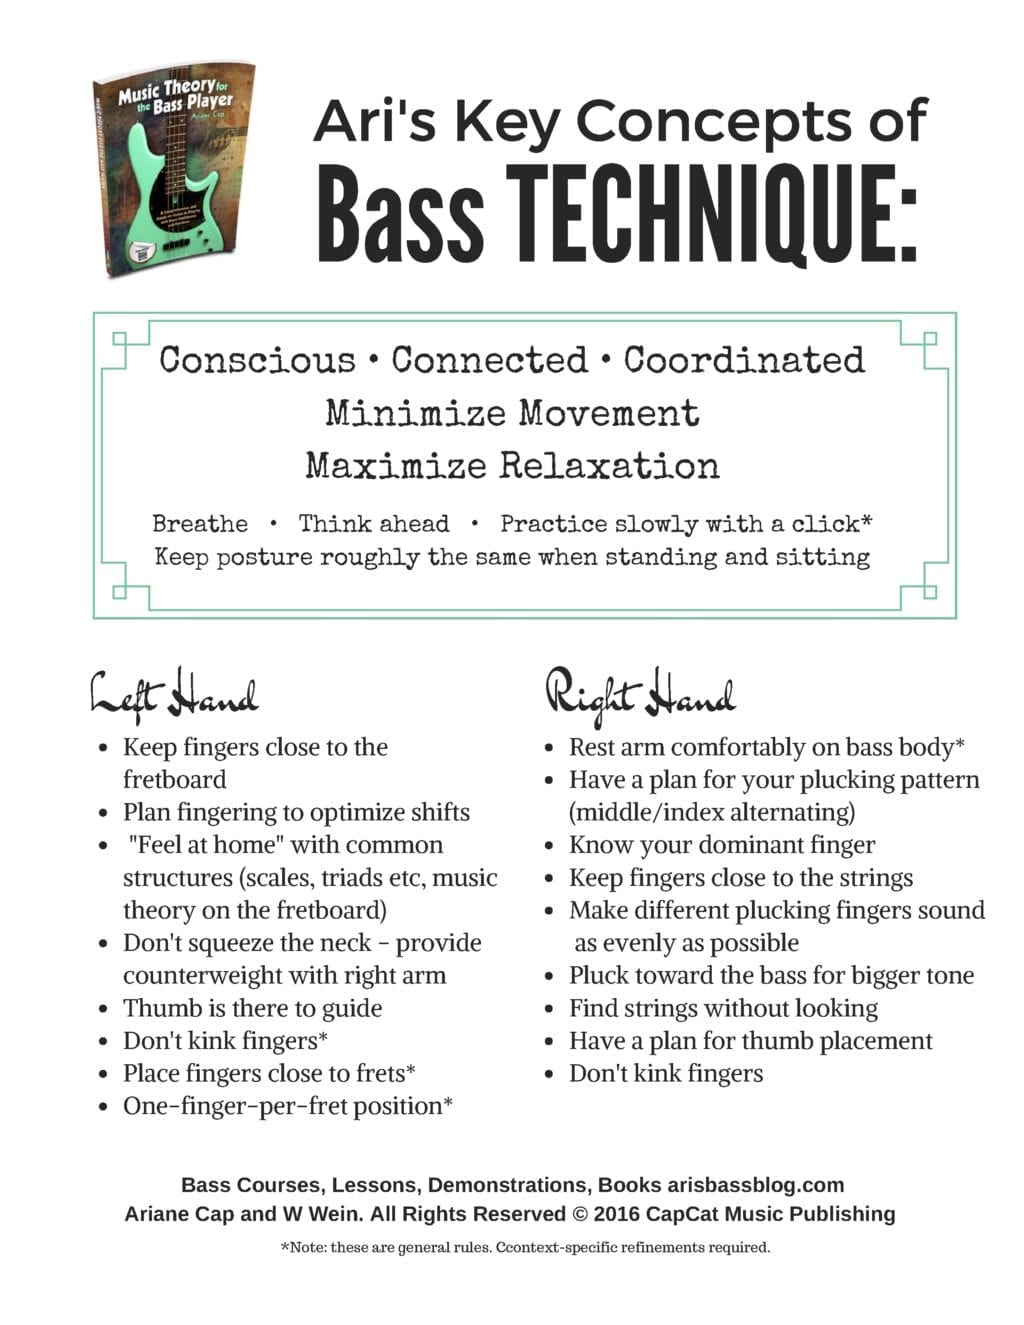 Ari's Key Concepts of Bass Technique Easy Print